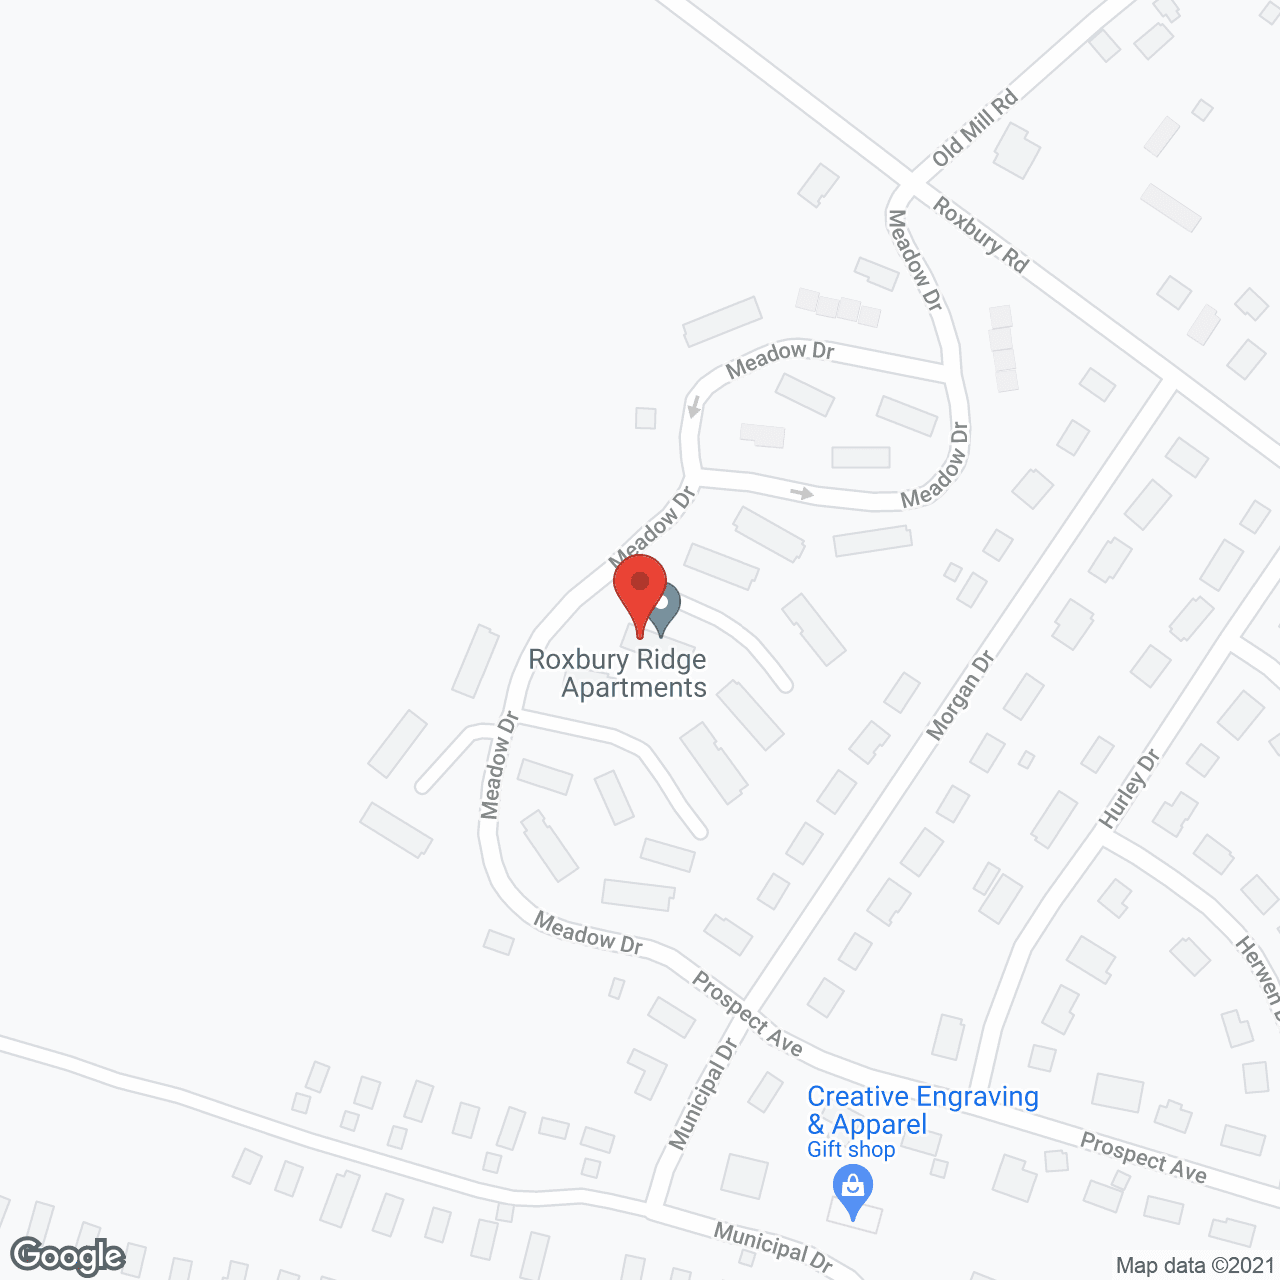 Roxbury Ridge Apartments in google map